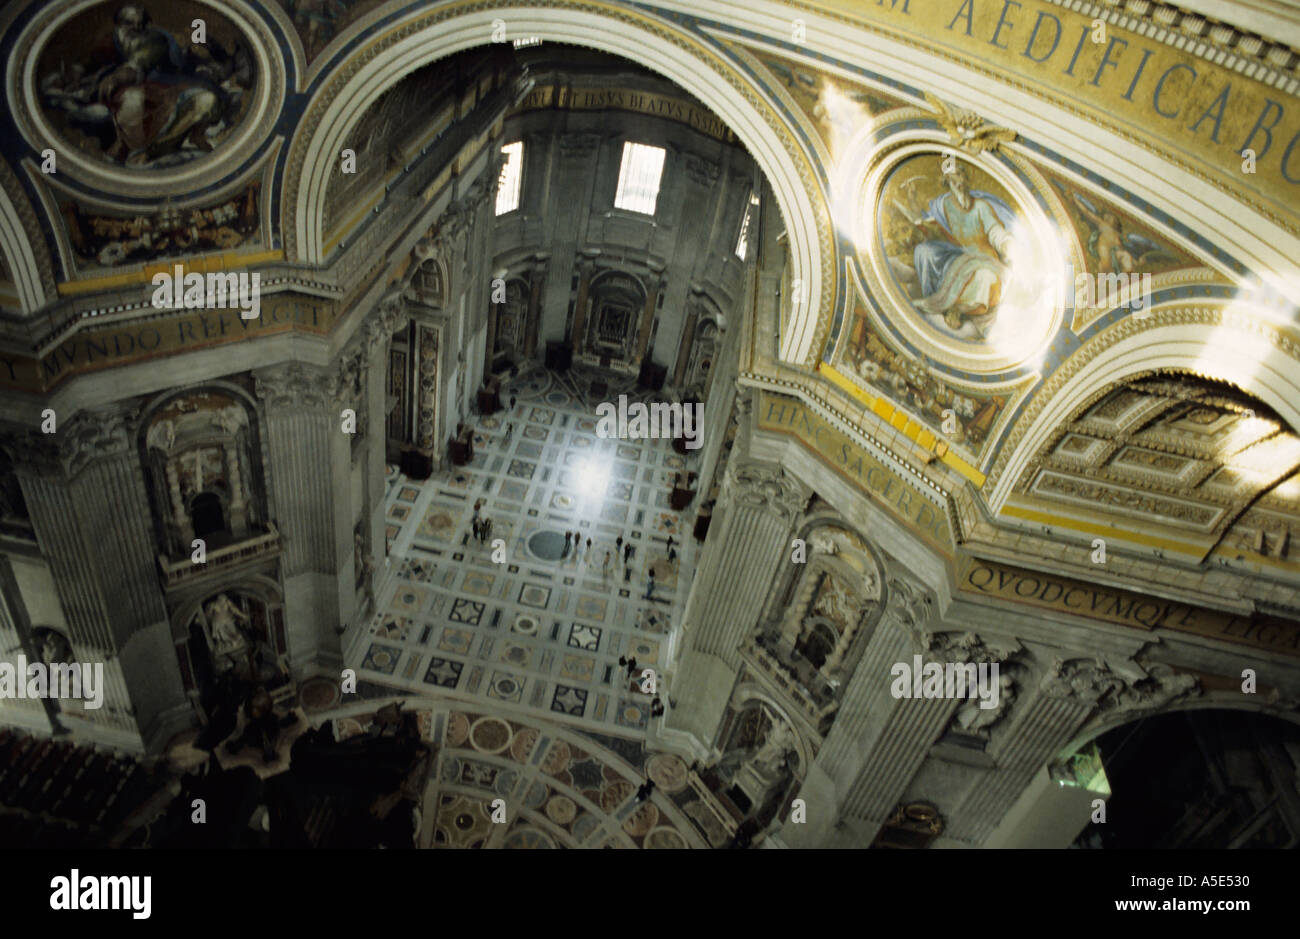 Balkon in der Kuppel von St. Peter Basilika, Vatikanstadt, Rom, Italien. Stockfoto